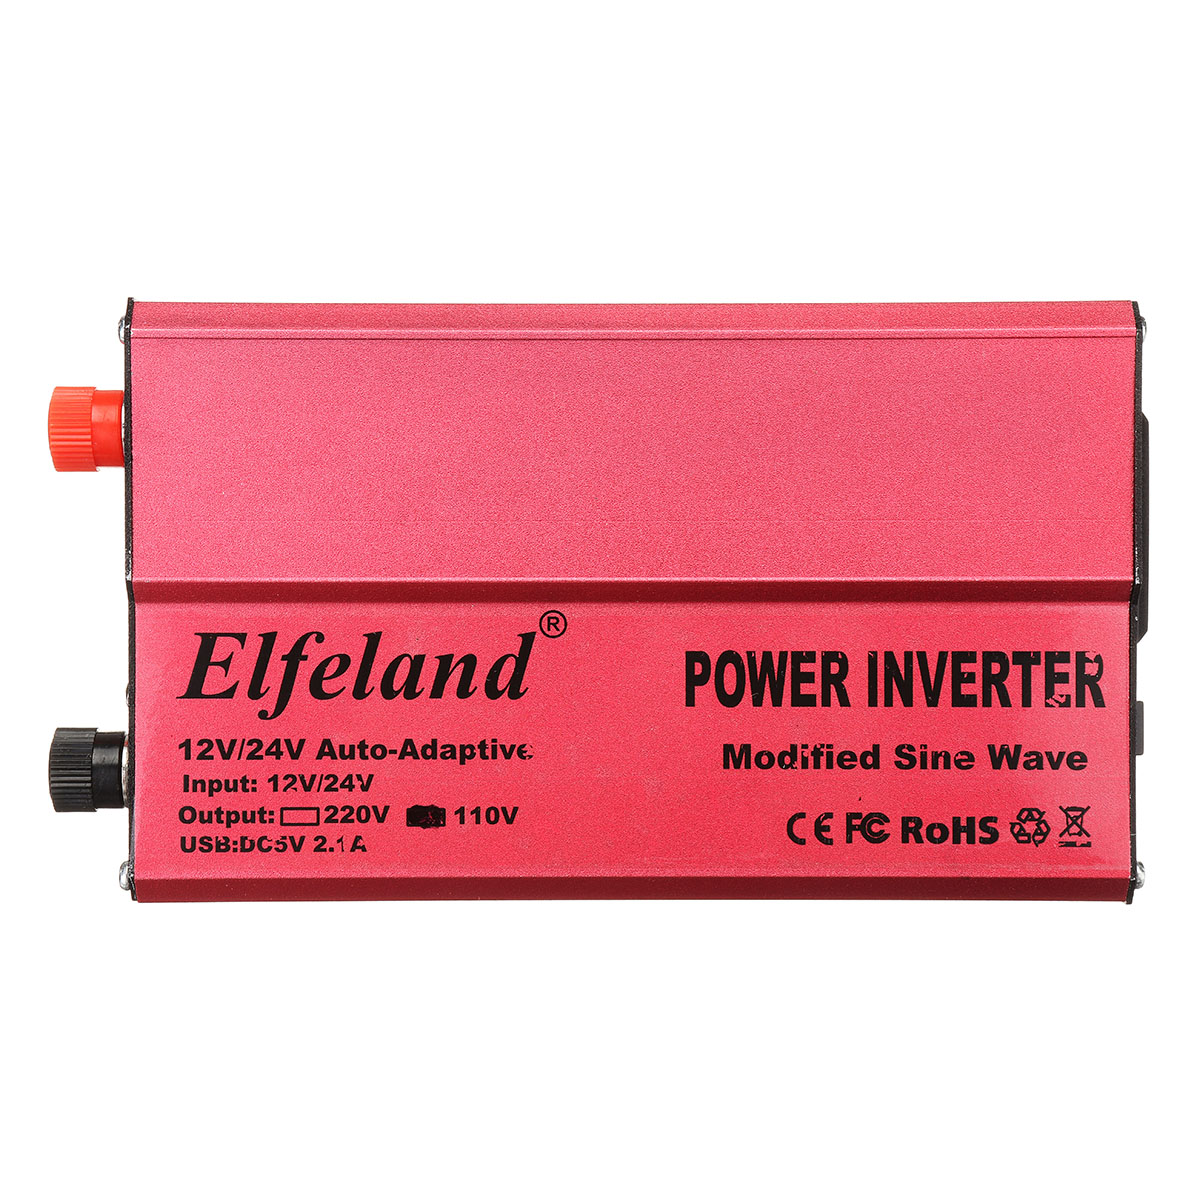 1000150020003000W-Peak-Power-Inverter-Modified-Sine-Wave-converter-1224V-To-110220V-1399136